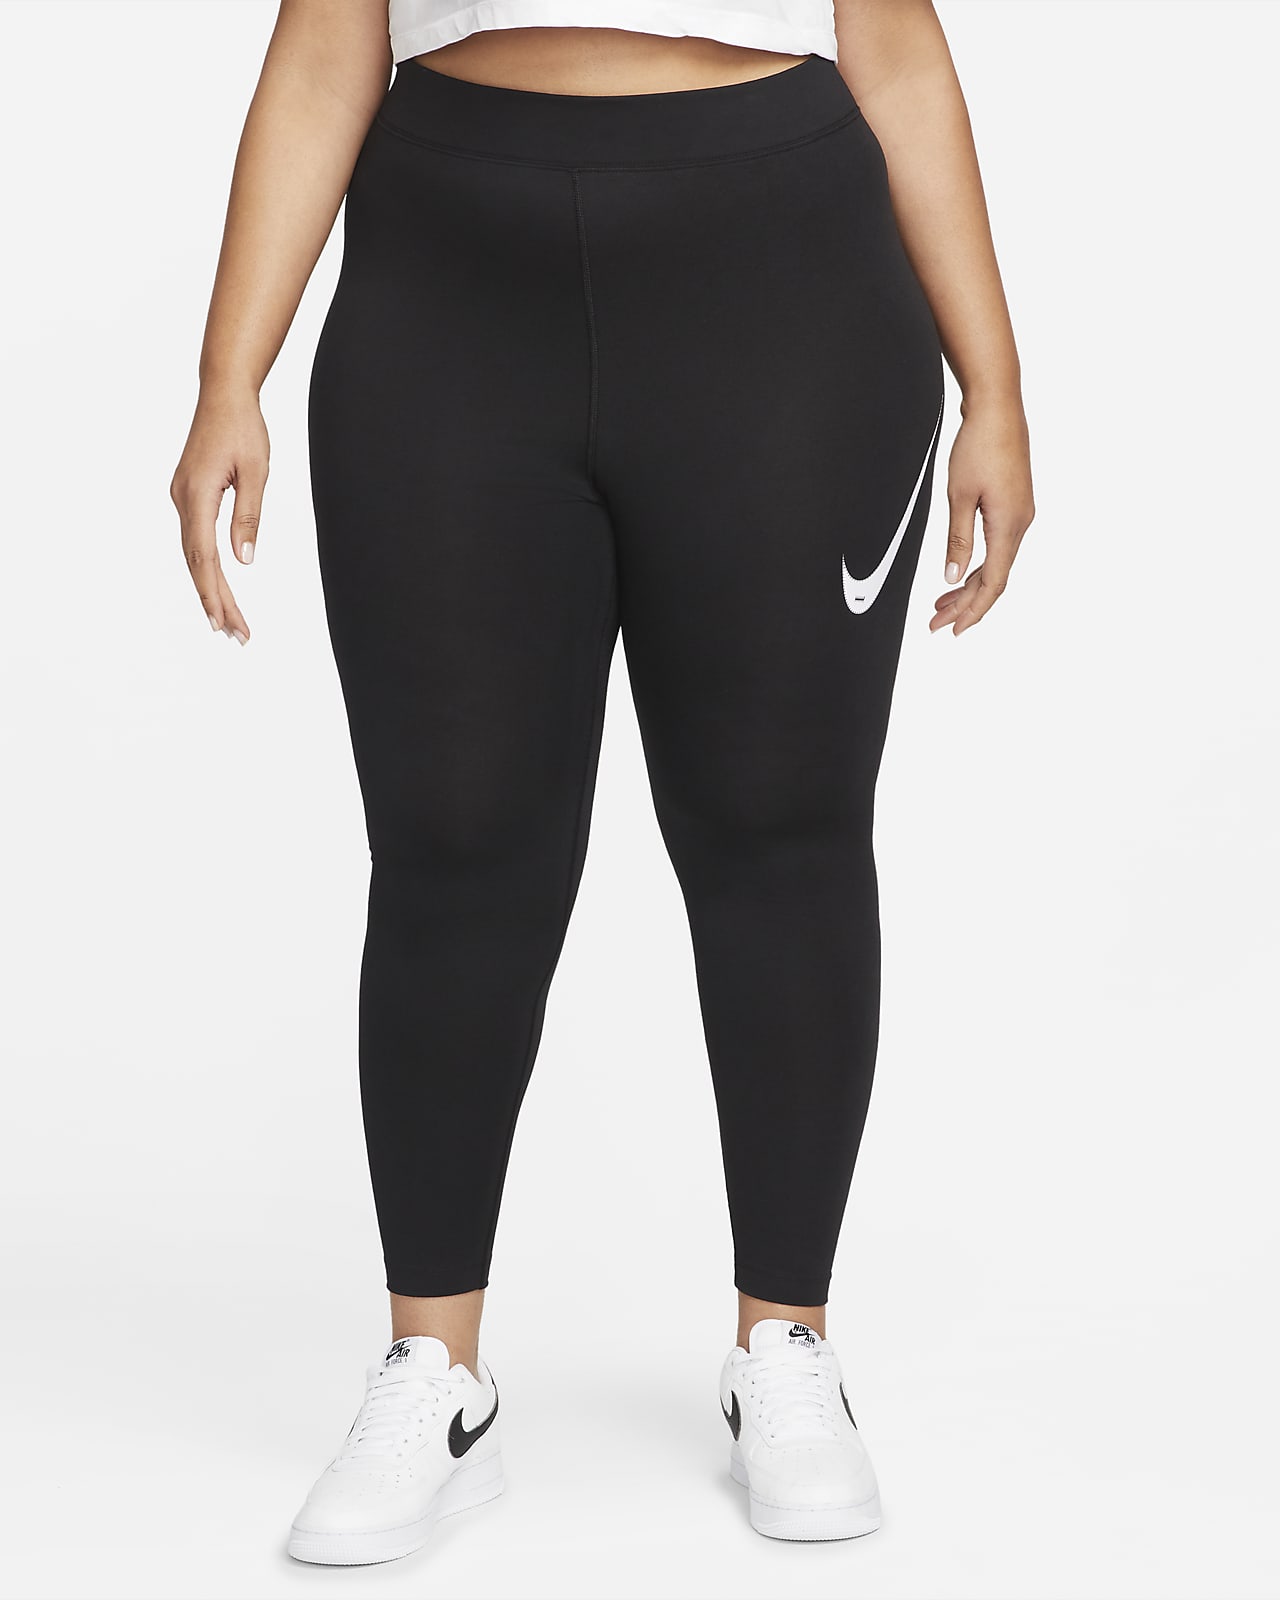 Legging taille haute Nike Sportswear Swoosh pour Femme (grande taille)